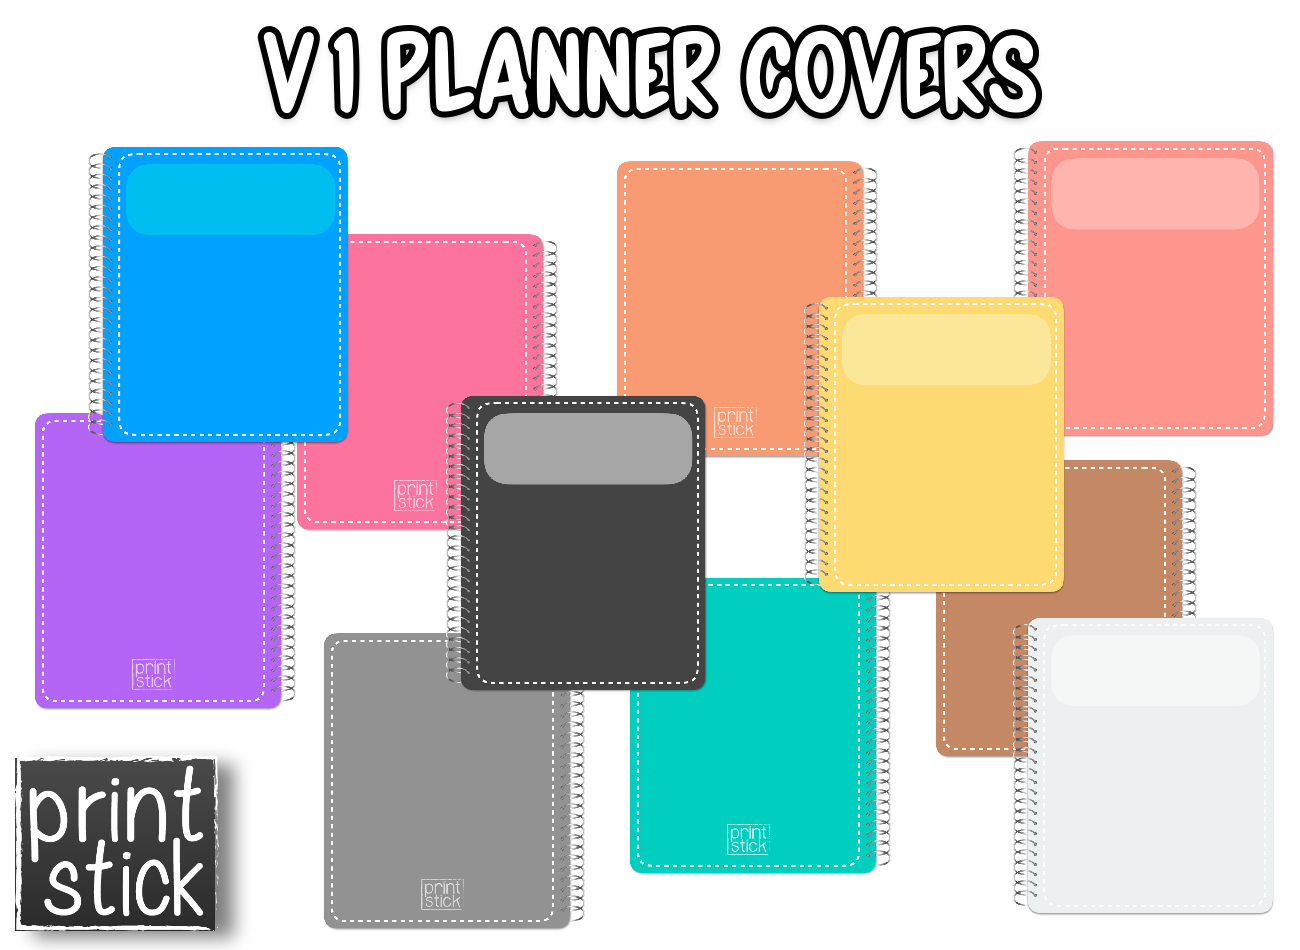 Vida Planner Covers - Print Stick